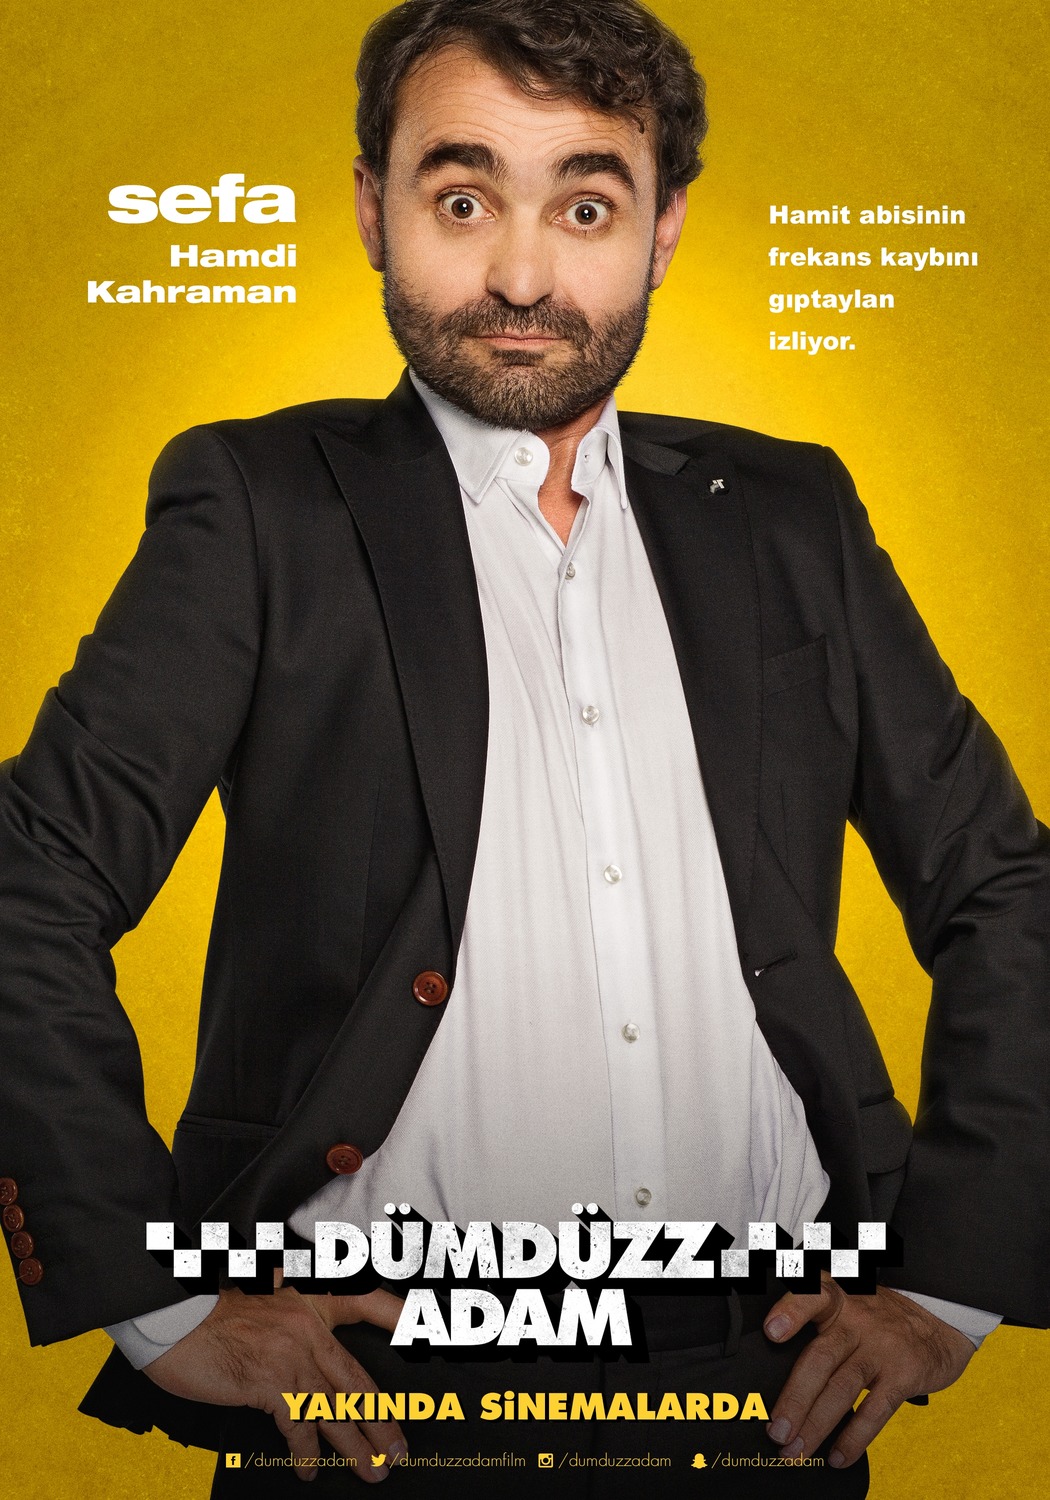 Extra Large Movie Poster Image for Dümdüzz Adam (#16 of 16)